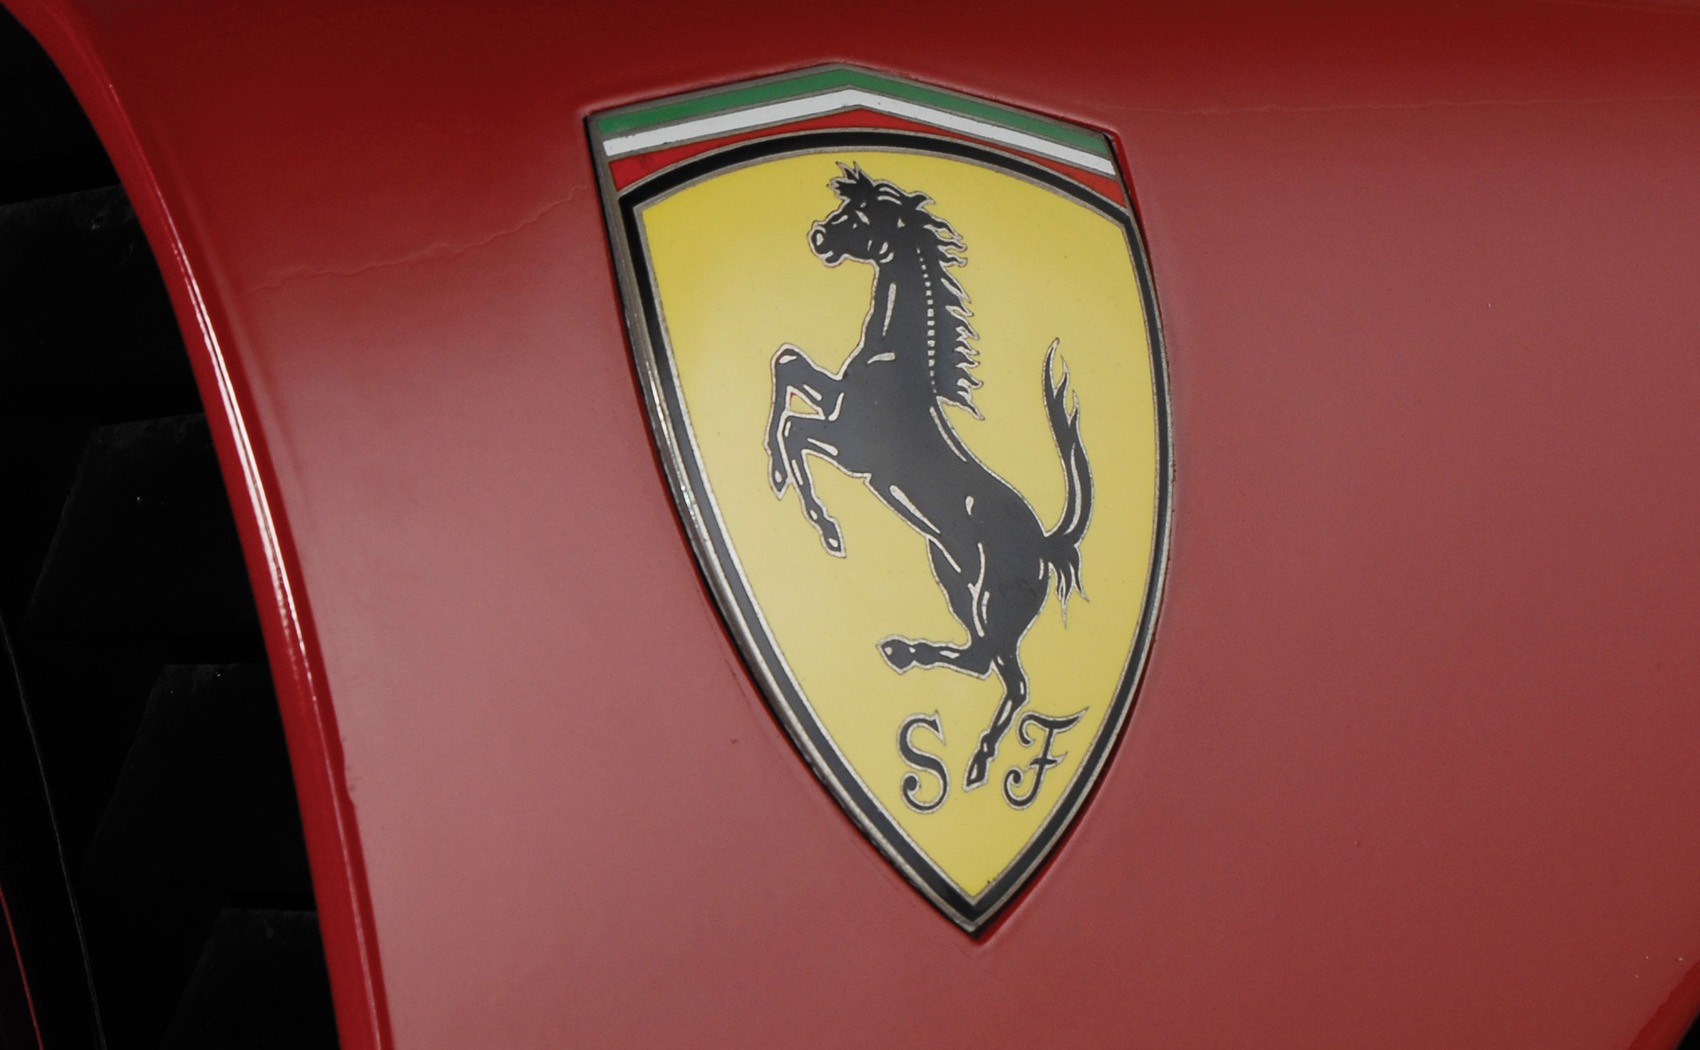 What Makes the Ferrari Logo Fascinating?